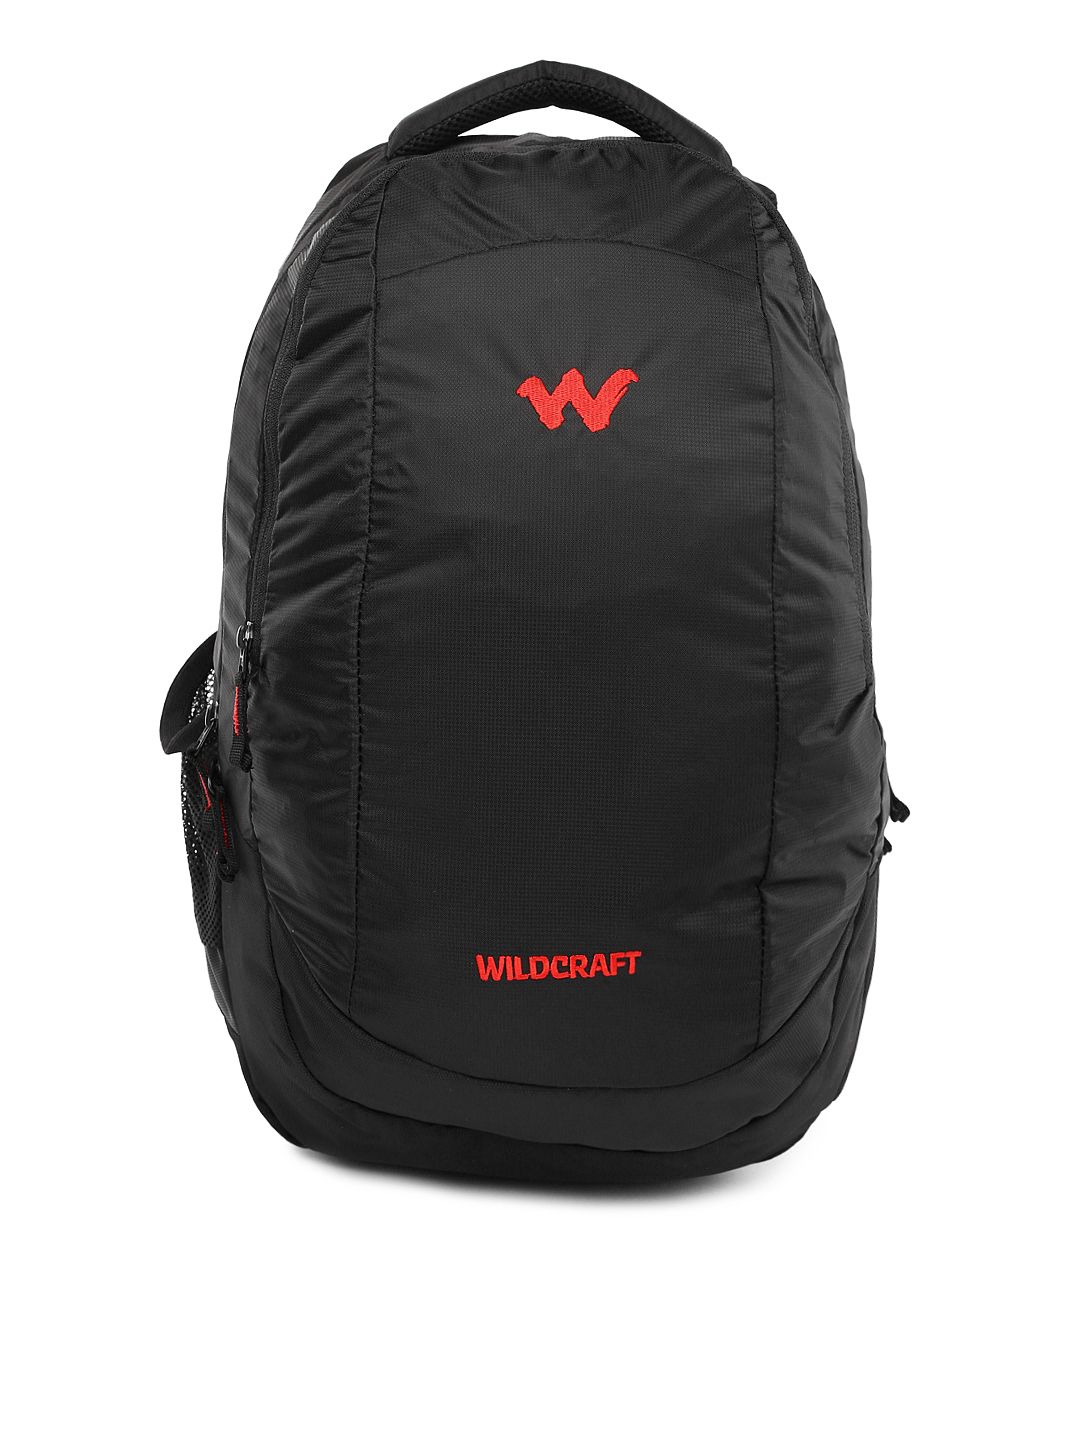 Wildcraft Unisex Black Peza Backpack Price in India